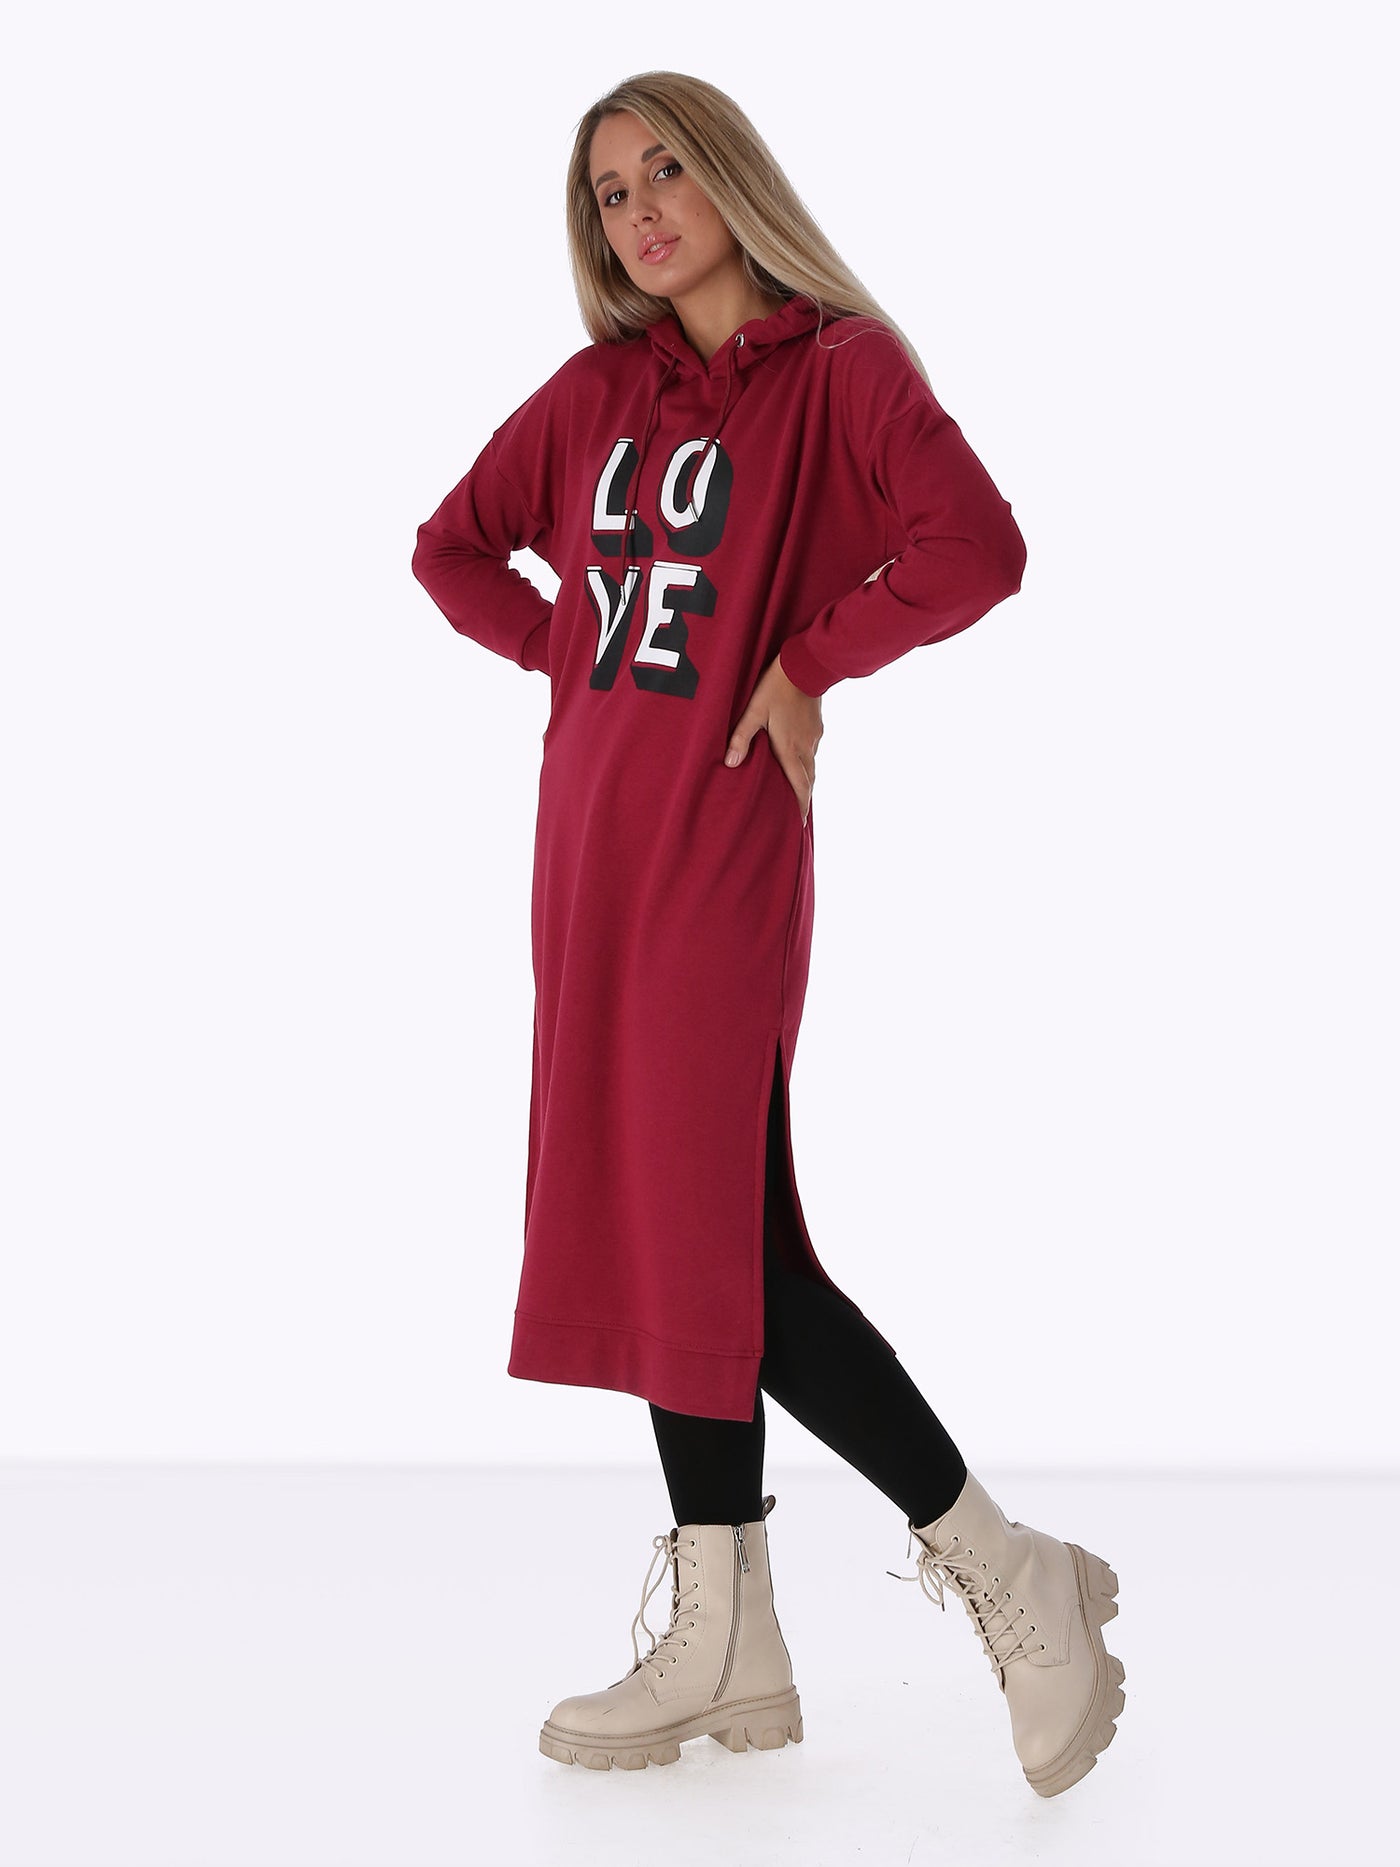 Sweatshirt Dress - "Love" - Hooded